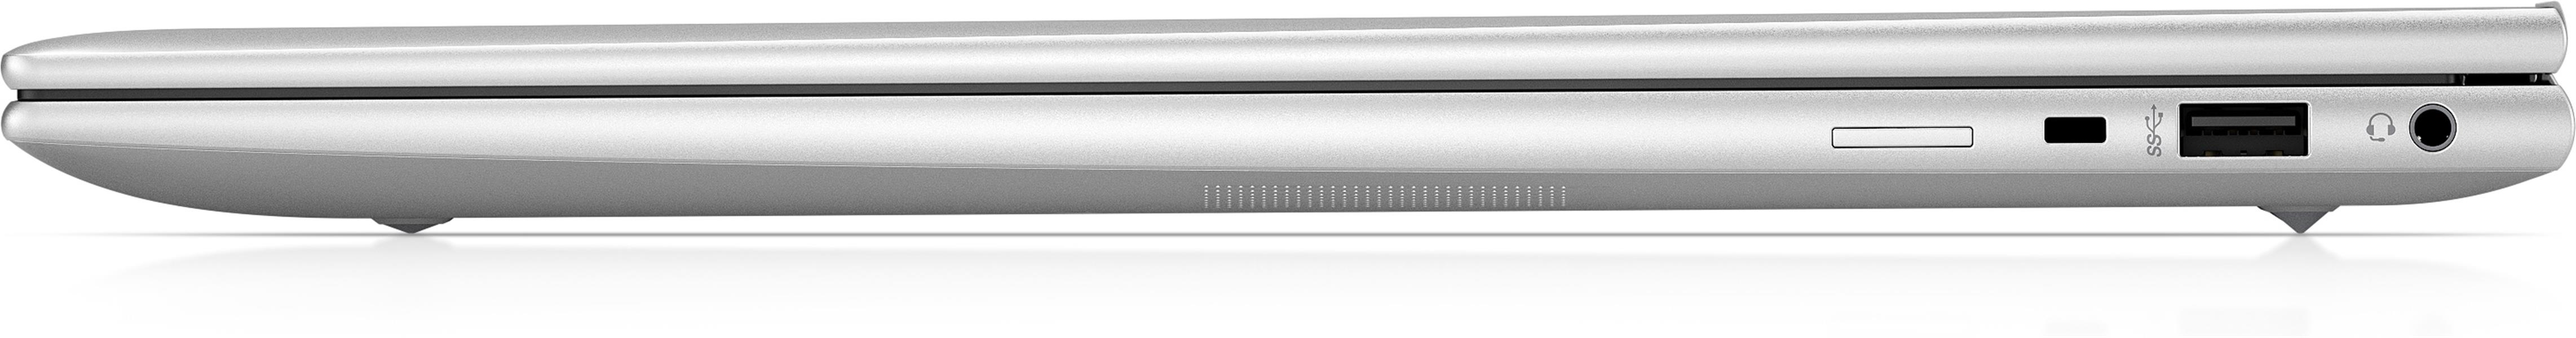 HP EliteBook 860 16 inch G9 notebook-pc